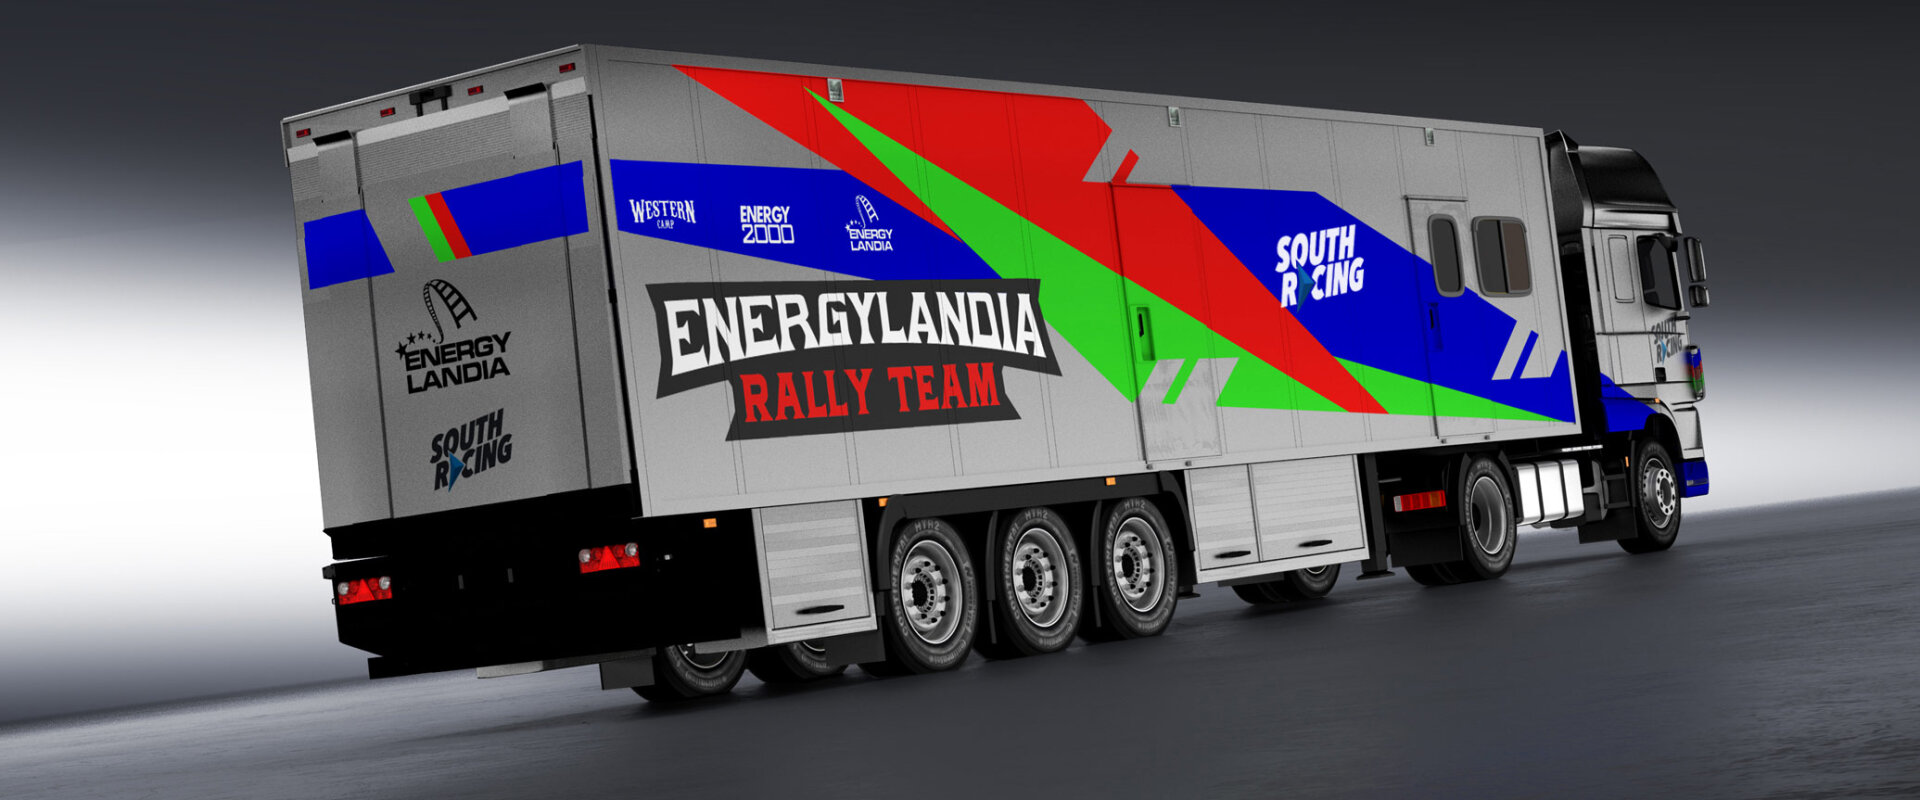 Energylandia Rally Team #1